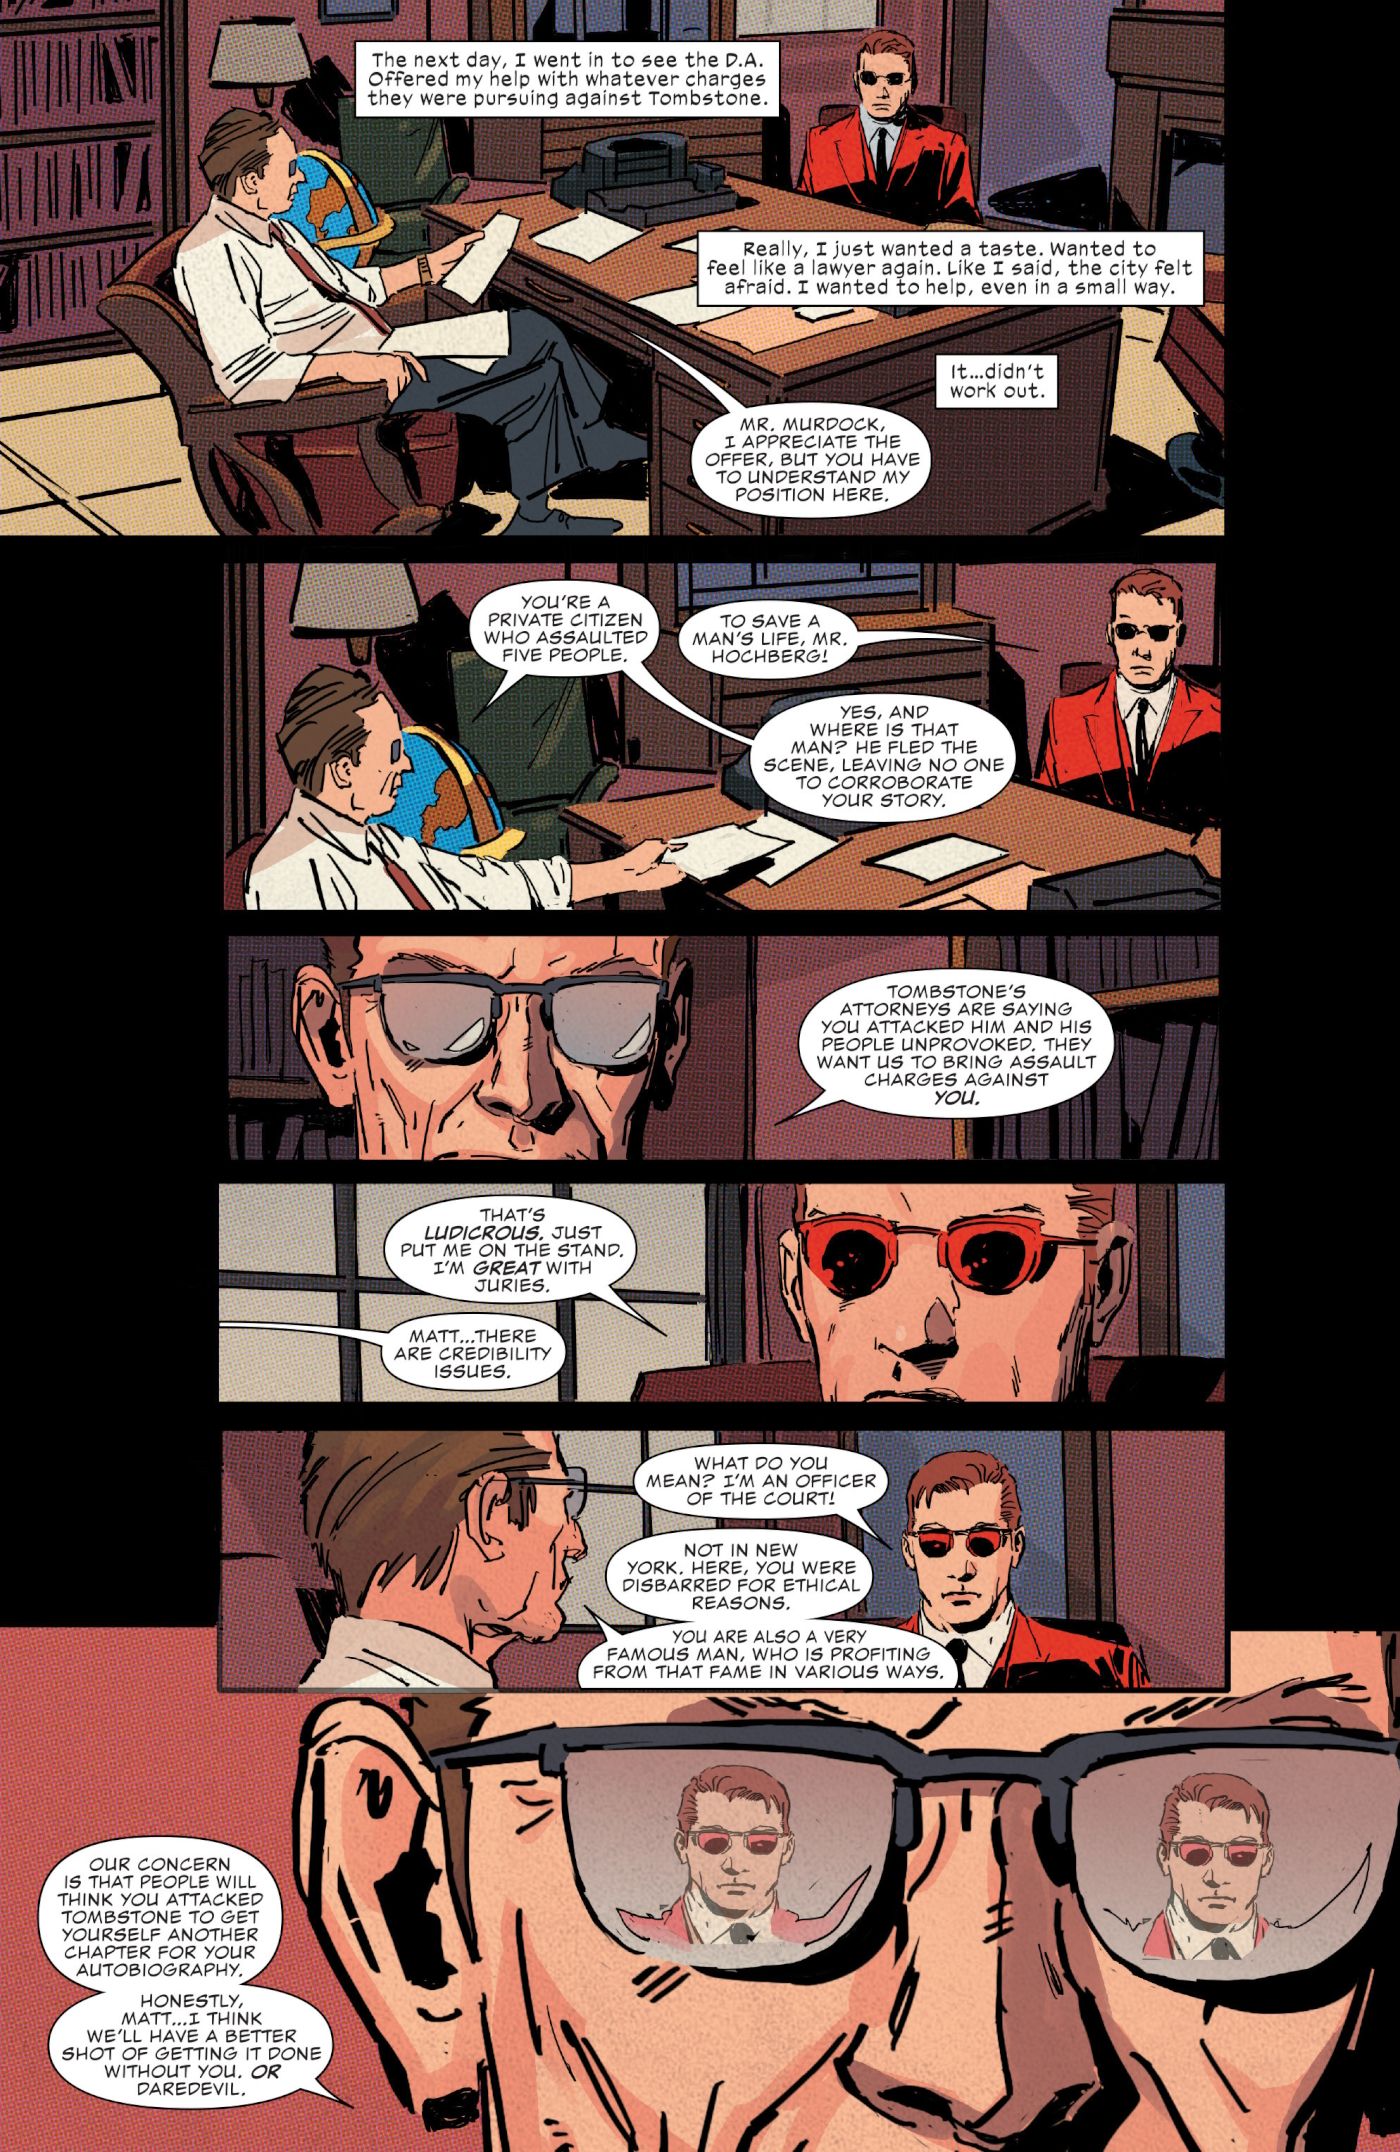 Daredevil #17, Daredevil's Public Identity Starts Causing Him Problems